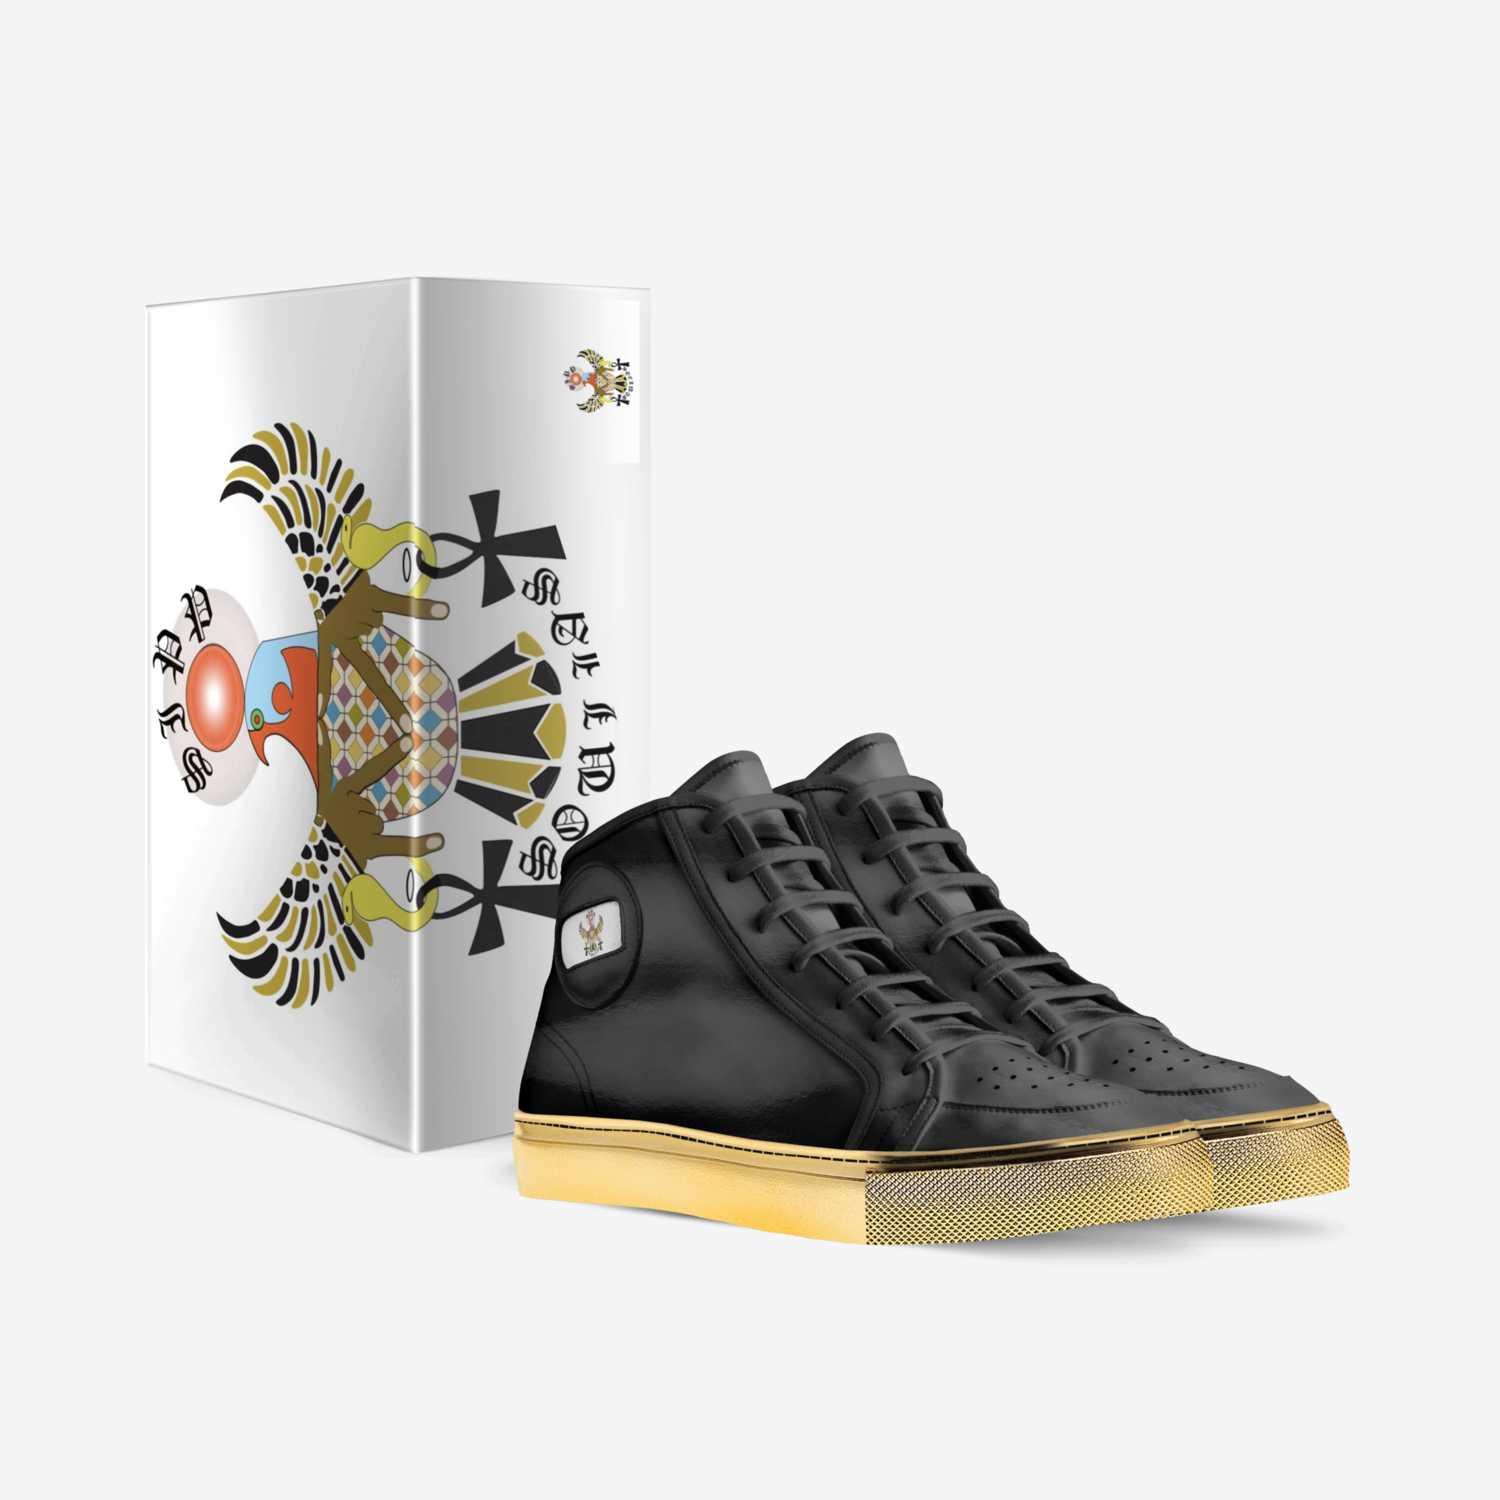 Sipp Souljas  custom made in Italy shoes by Darius Bradley | Box view